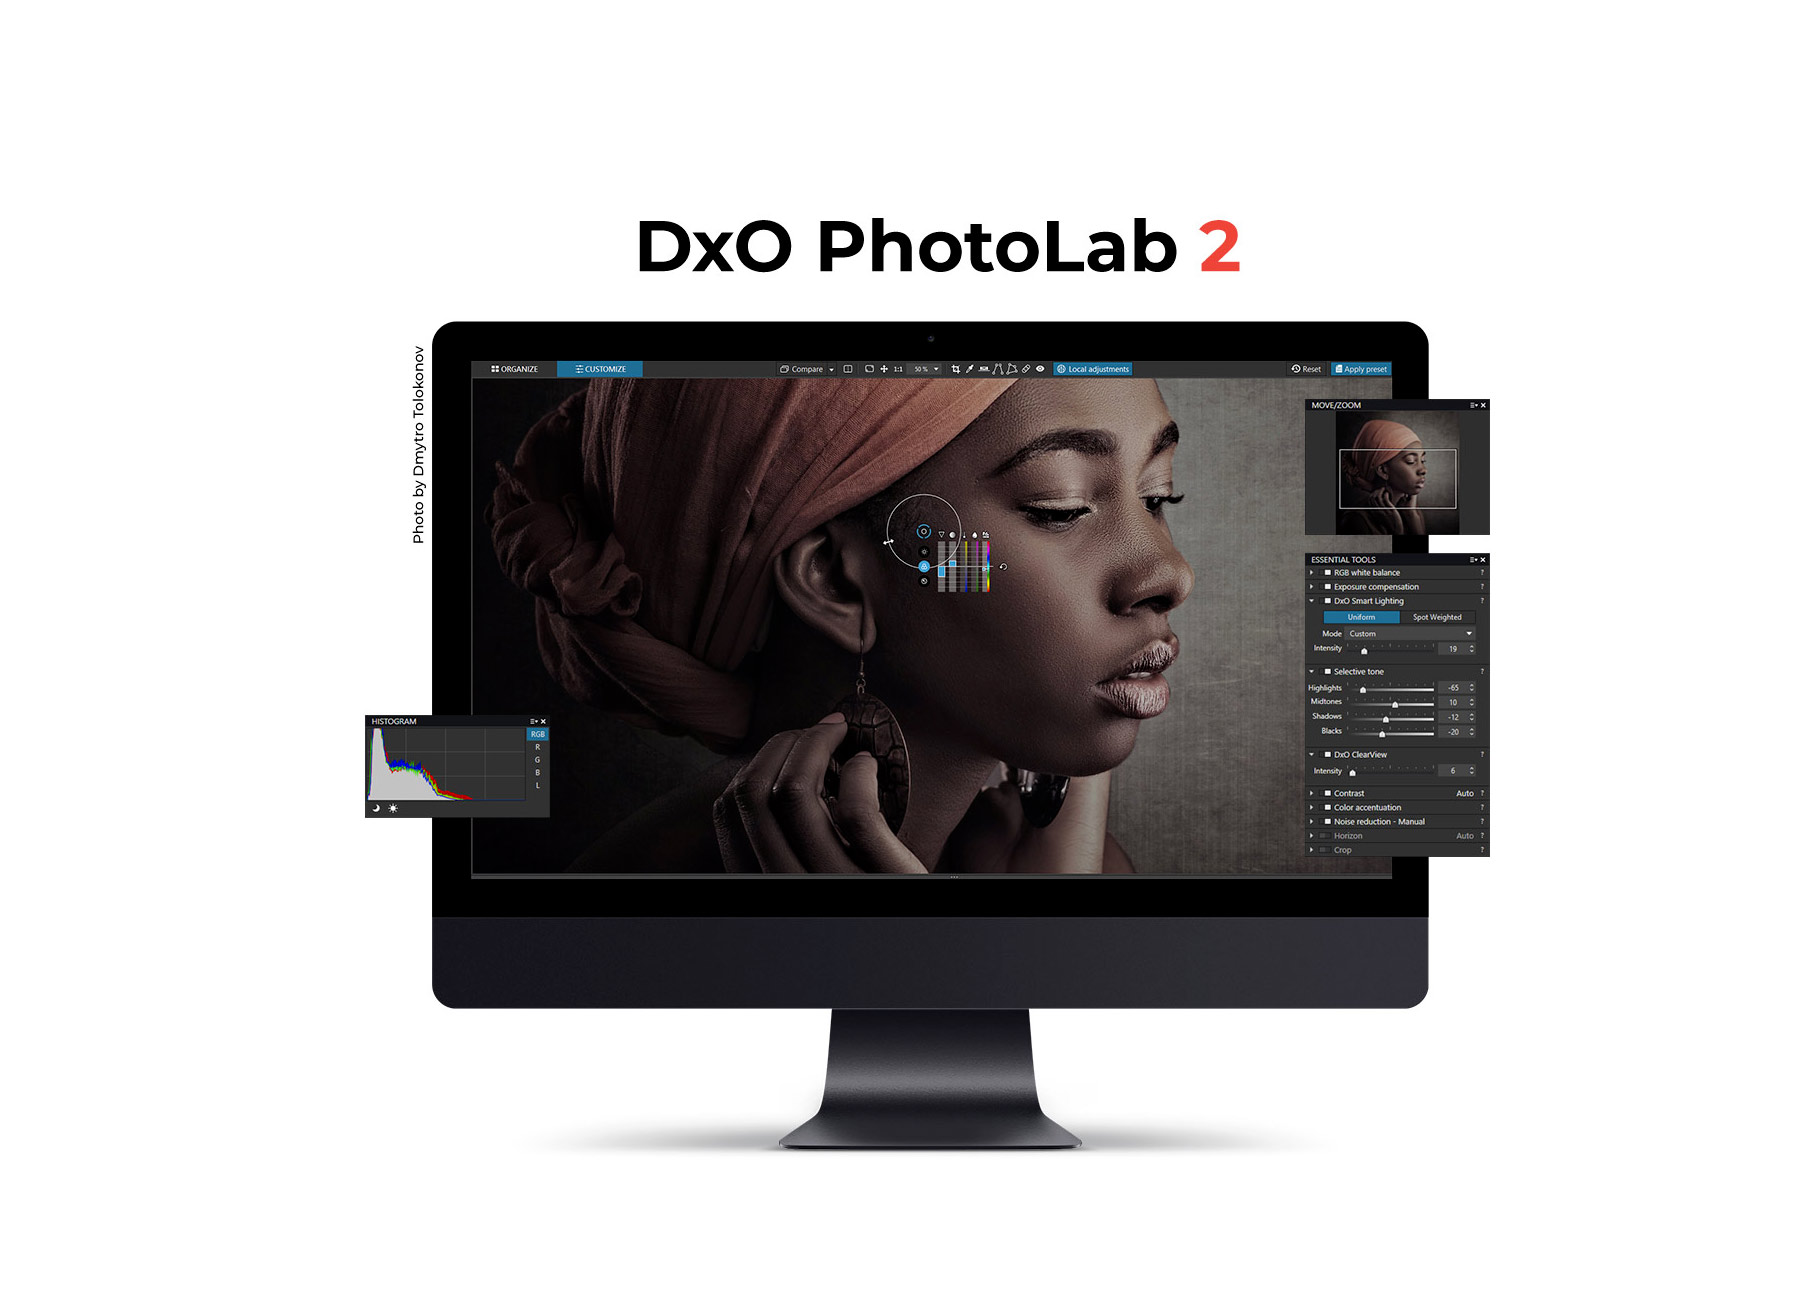 DxO PhotoLab 7.0.1.76 instal the new